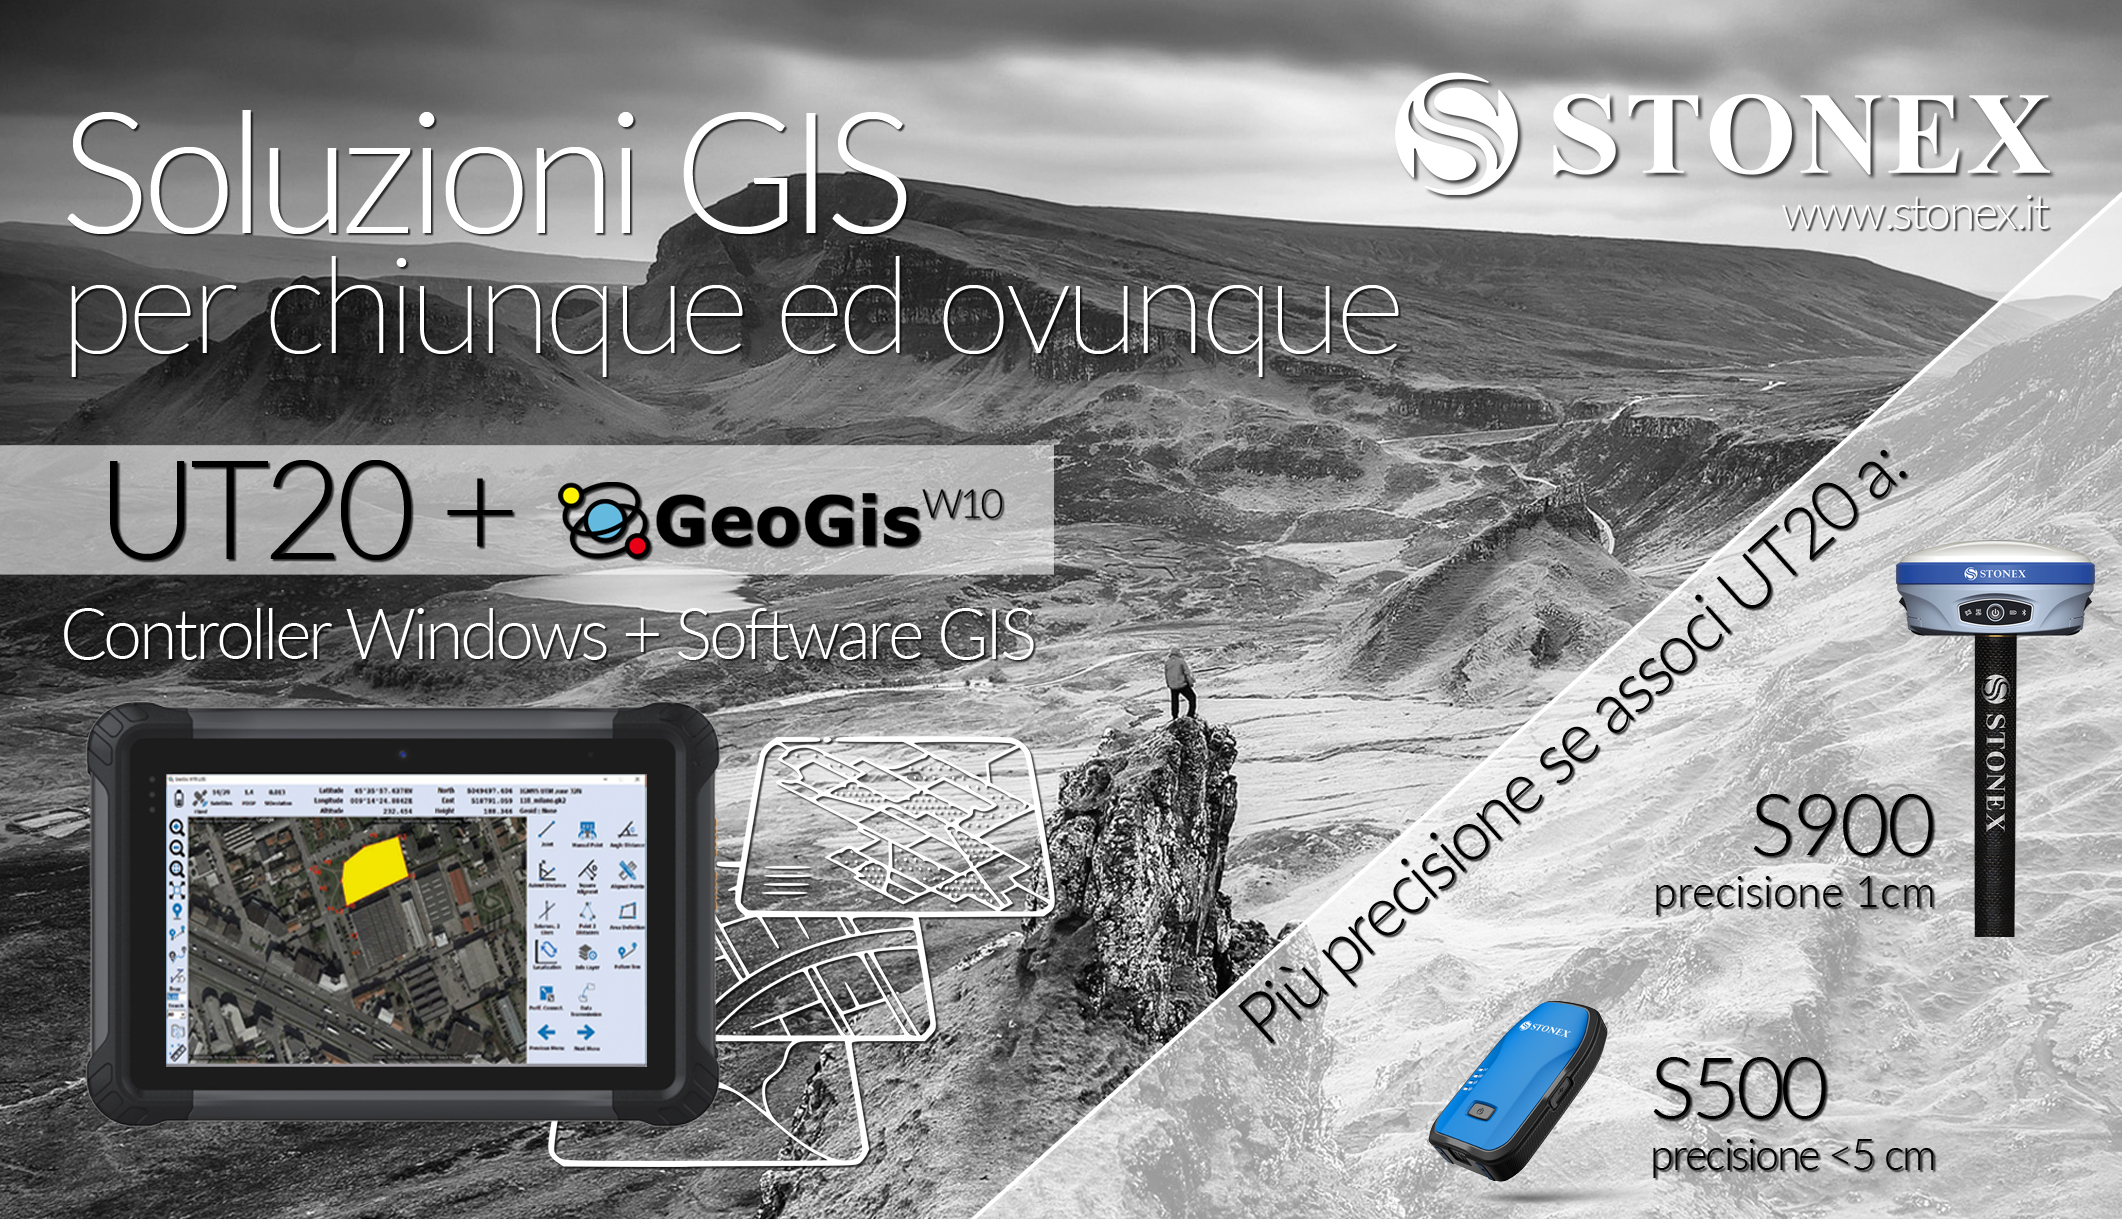 Soluzioni GIS per chiunque ed ovunque  UT20 + GeoGIS 10 | Controller Windows + Software GIS